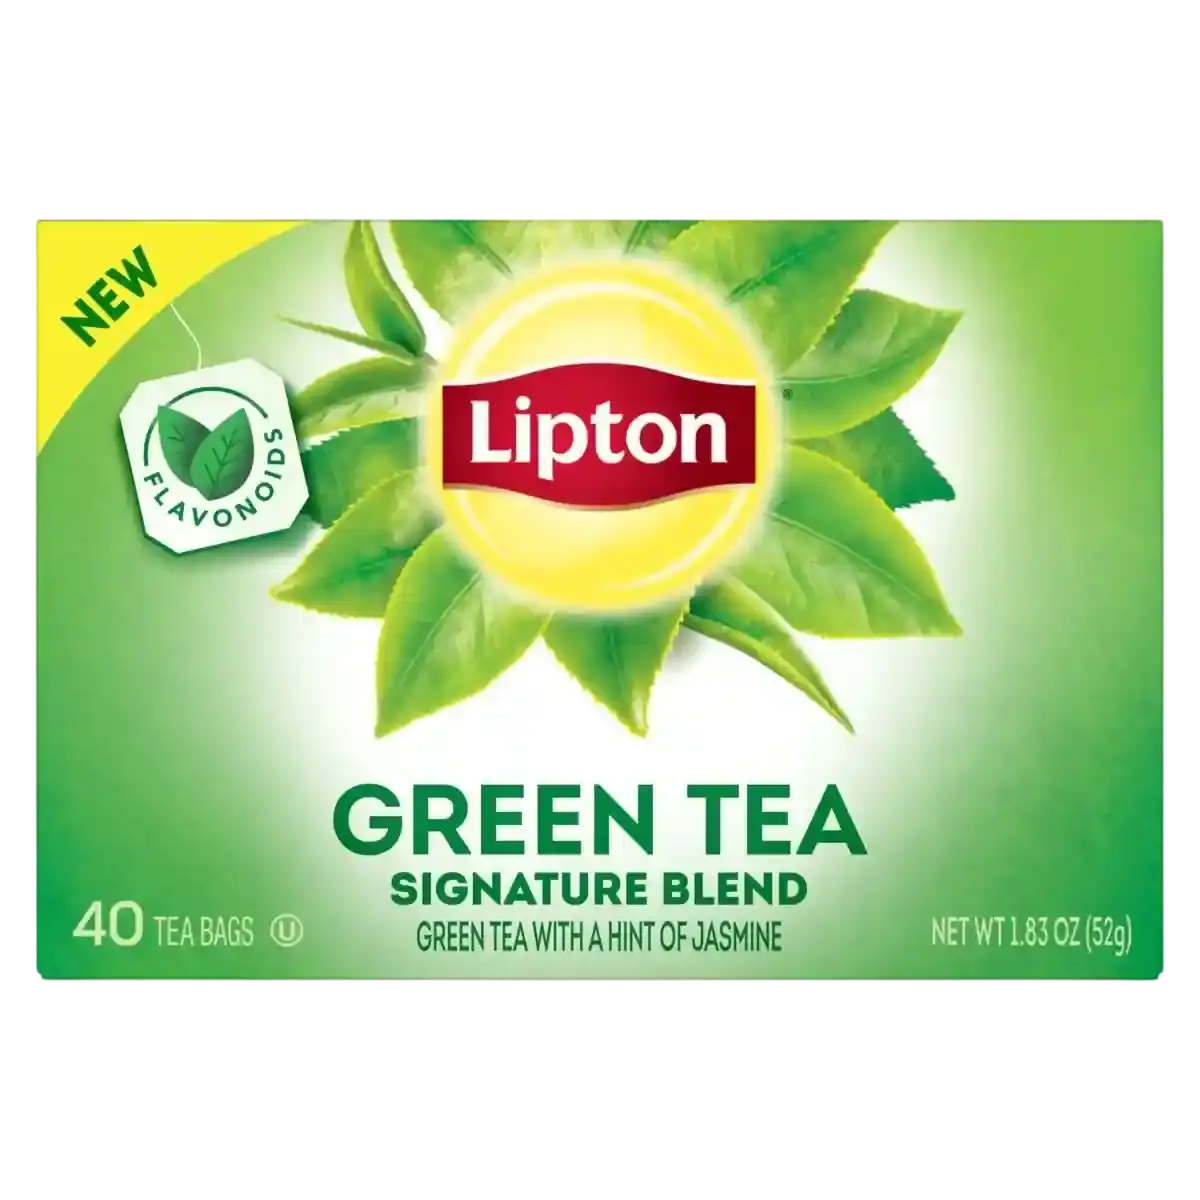  Signature Blend Green Tea Thumbnail img